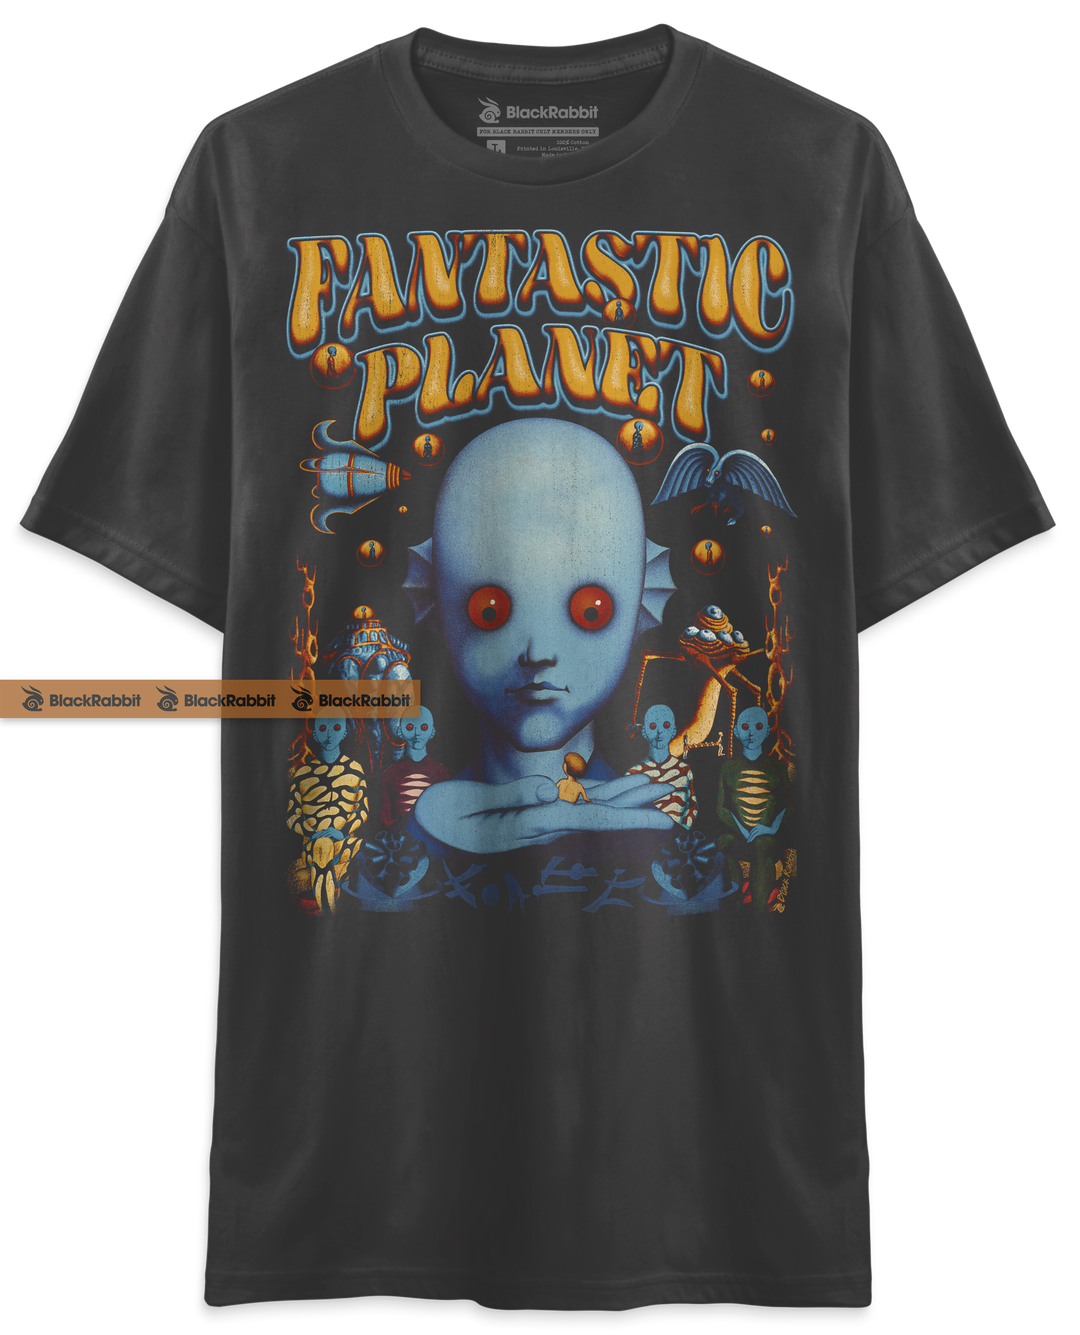 Fantastic Planet English Retro Vintage Animated Sci-Fi Unisex Classic T-Shirt